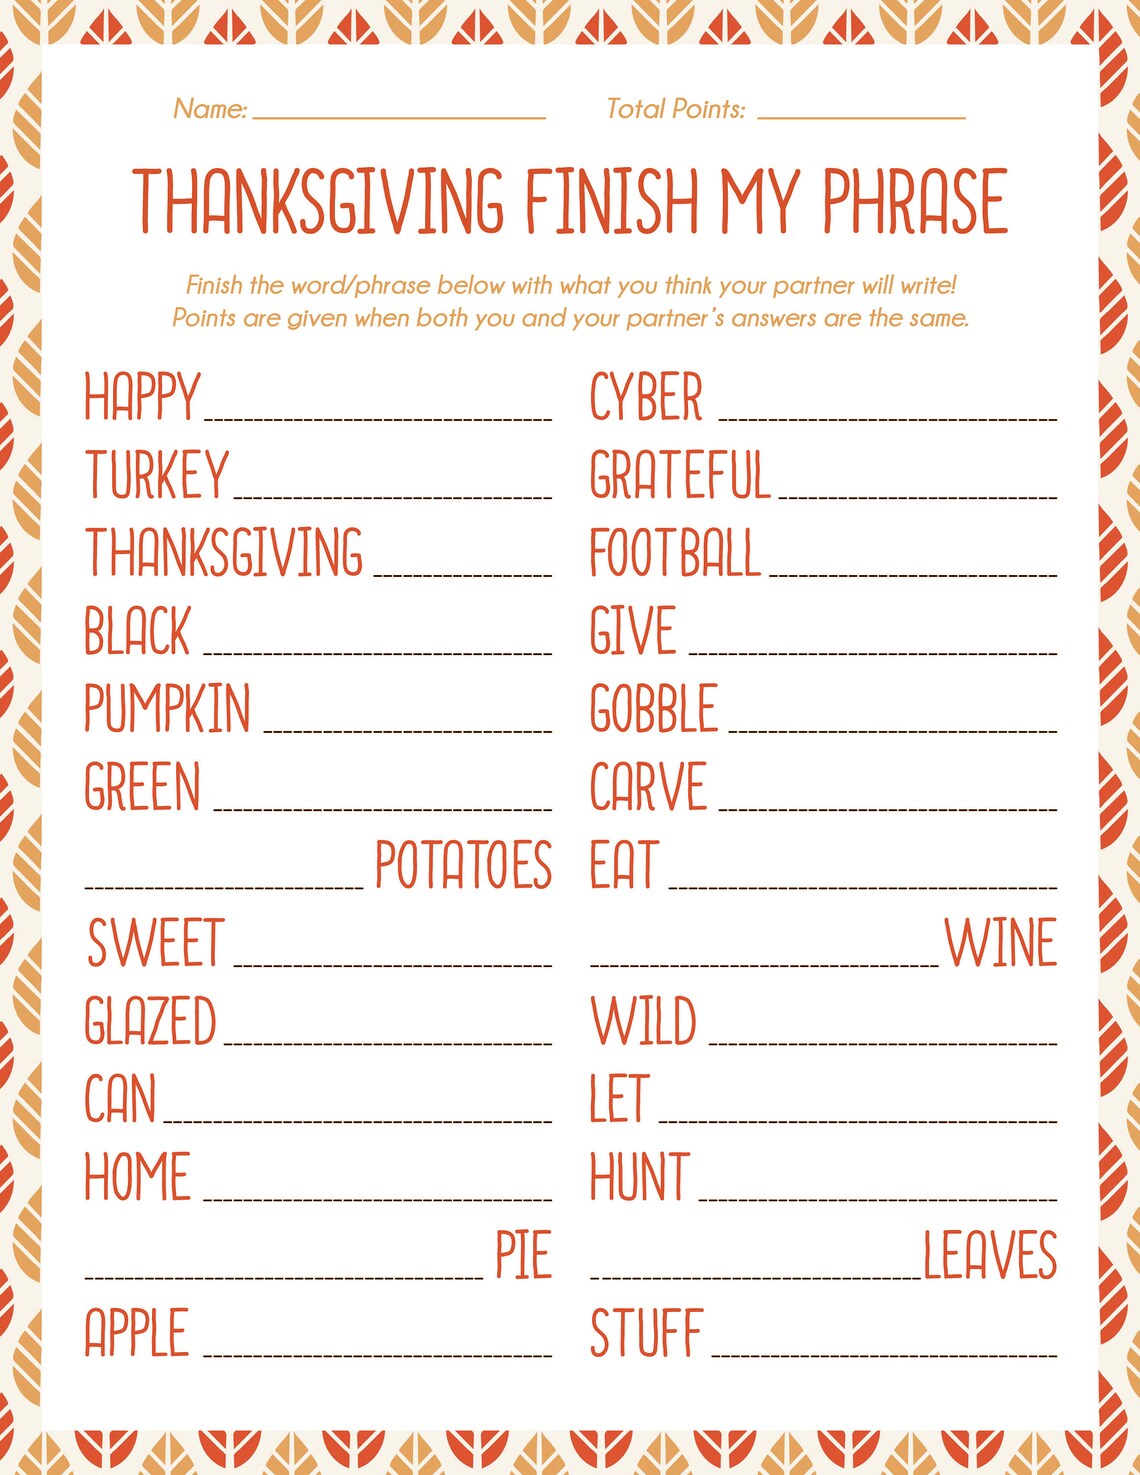 Thanksgiving Finish My Phrase Finish the Phrase - Etsy